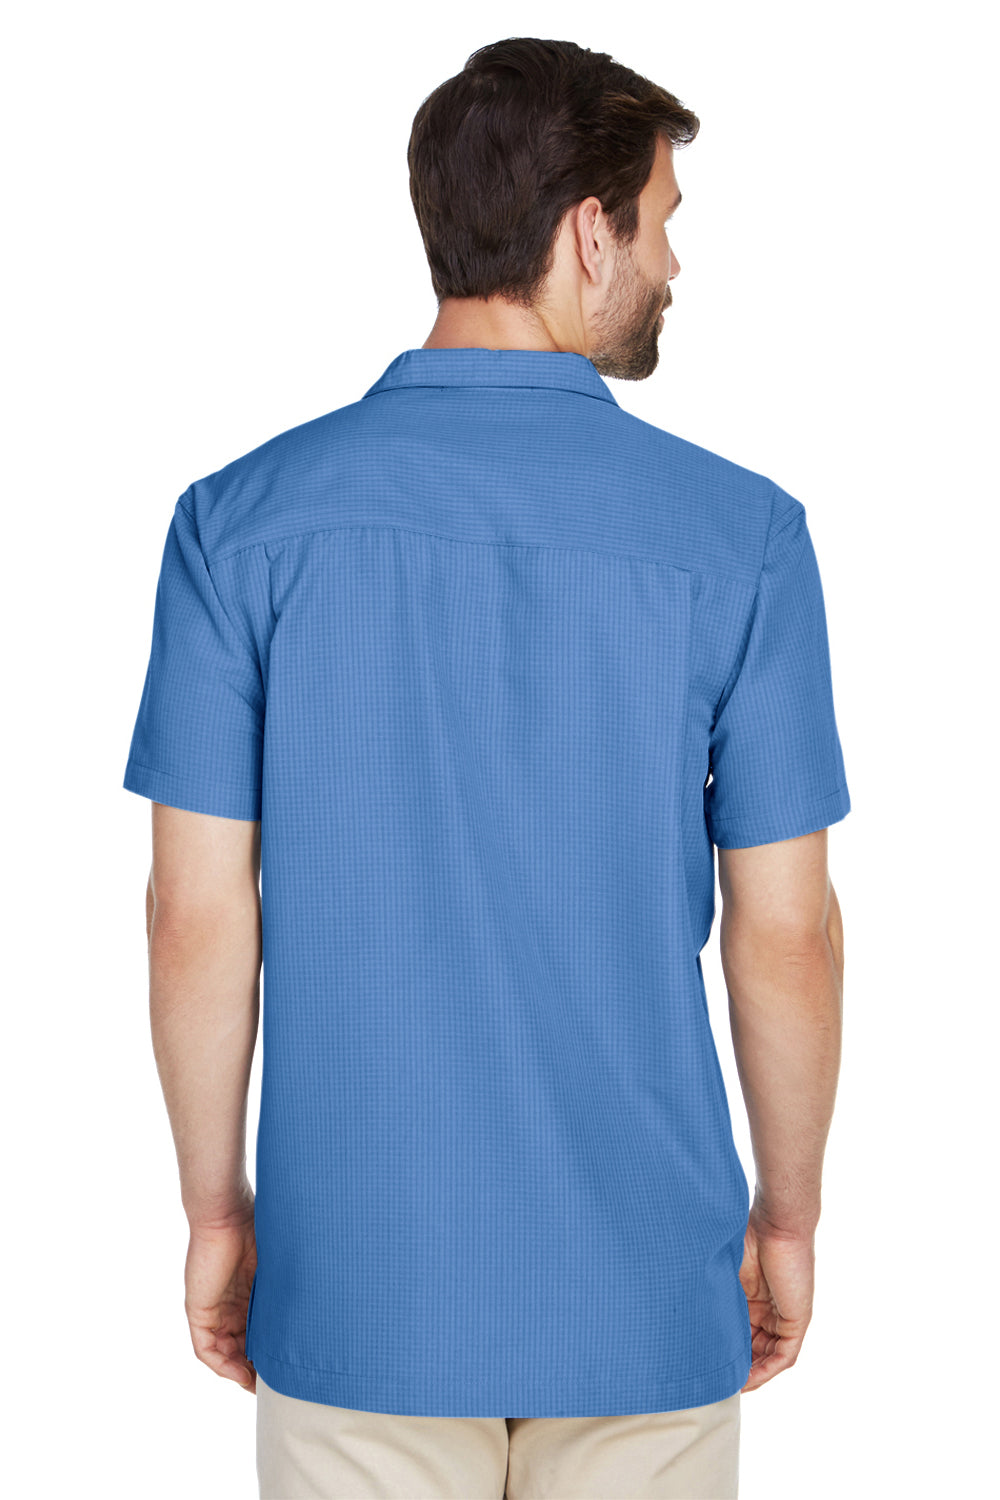 Harriton M560 Mens Barbados Wrinkle Resistant Short Sleeve Button Down Camp Shirt w/ Pocket Pool Blue Back